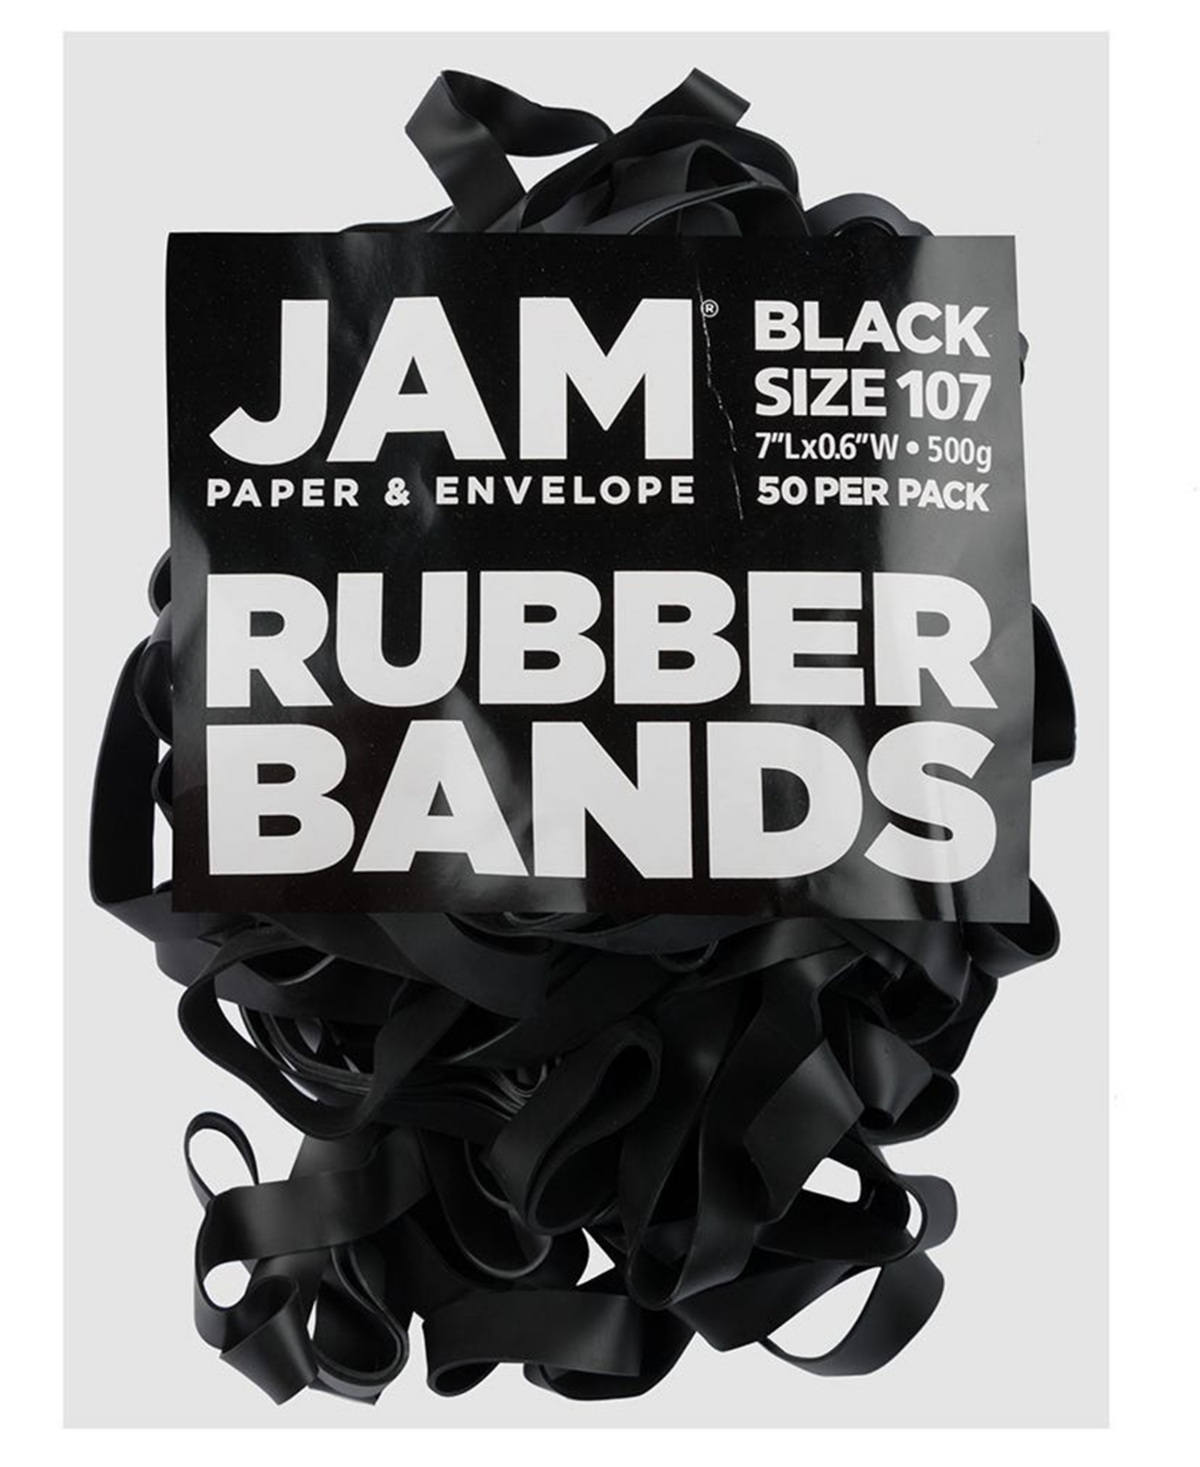 Durable Rubber Bands - Size 107 - Multi-Purpose Rubber bands - 50 Per Pack - Black